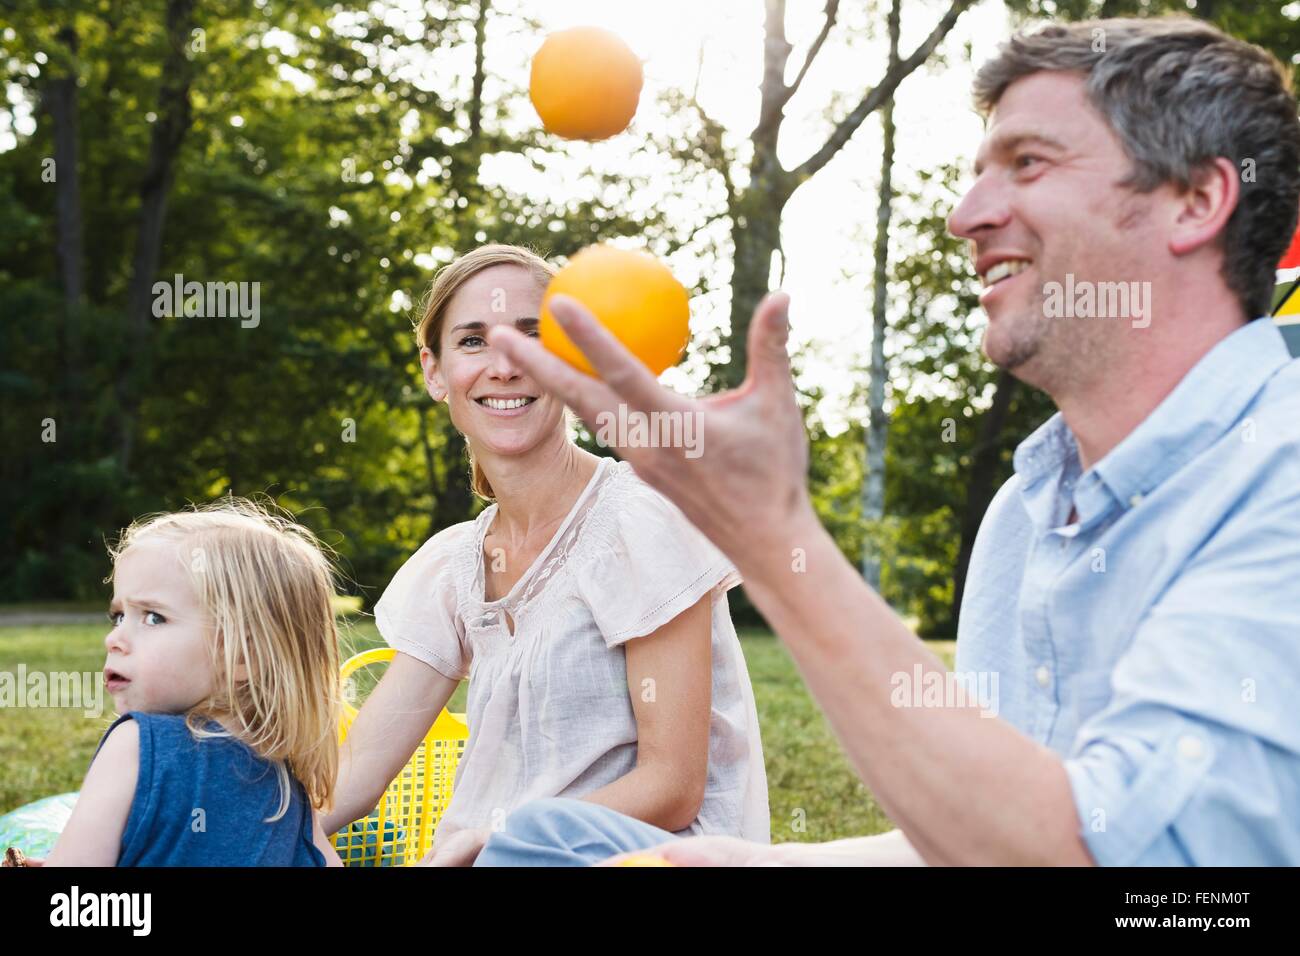 Reifer Mann jonglieren Orangen im Familien-Picknick im park Stockfoto